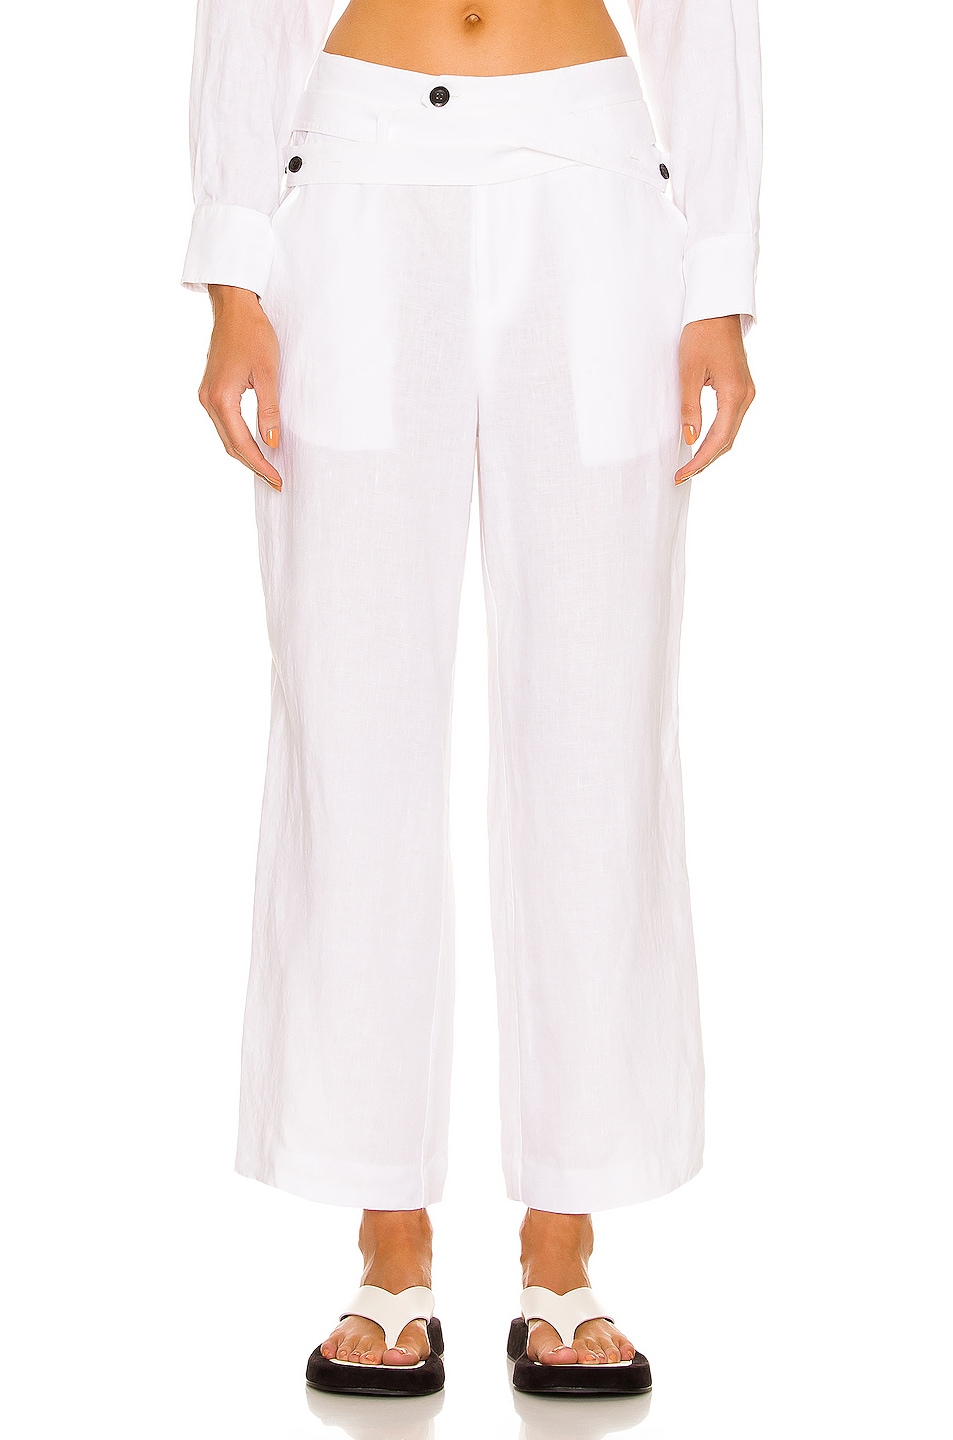 Image 1 of Marissa Webb Artie Linen Wrap Pant in Linen White